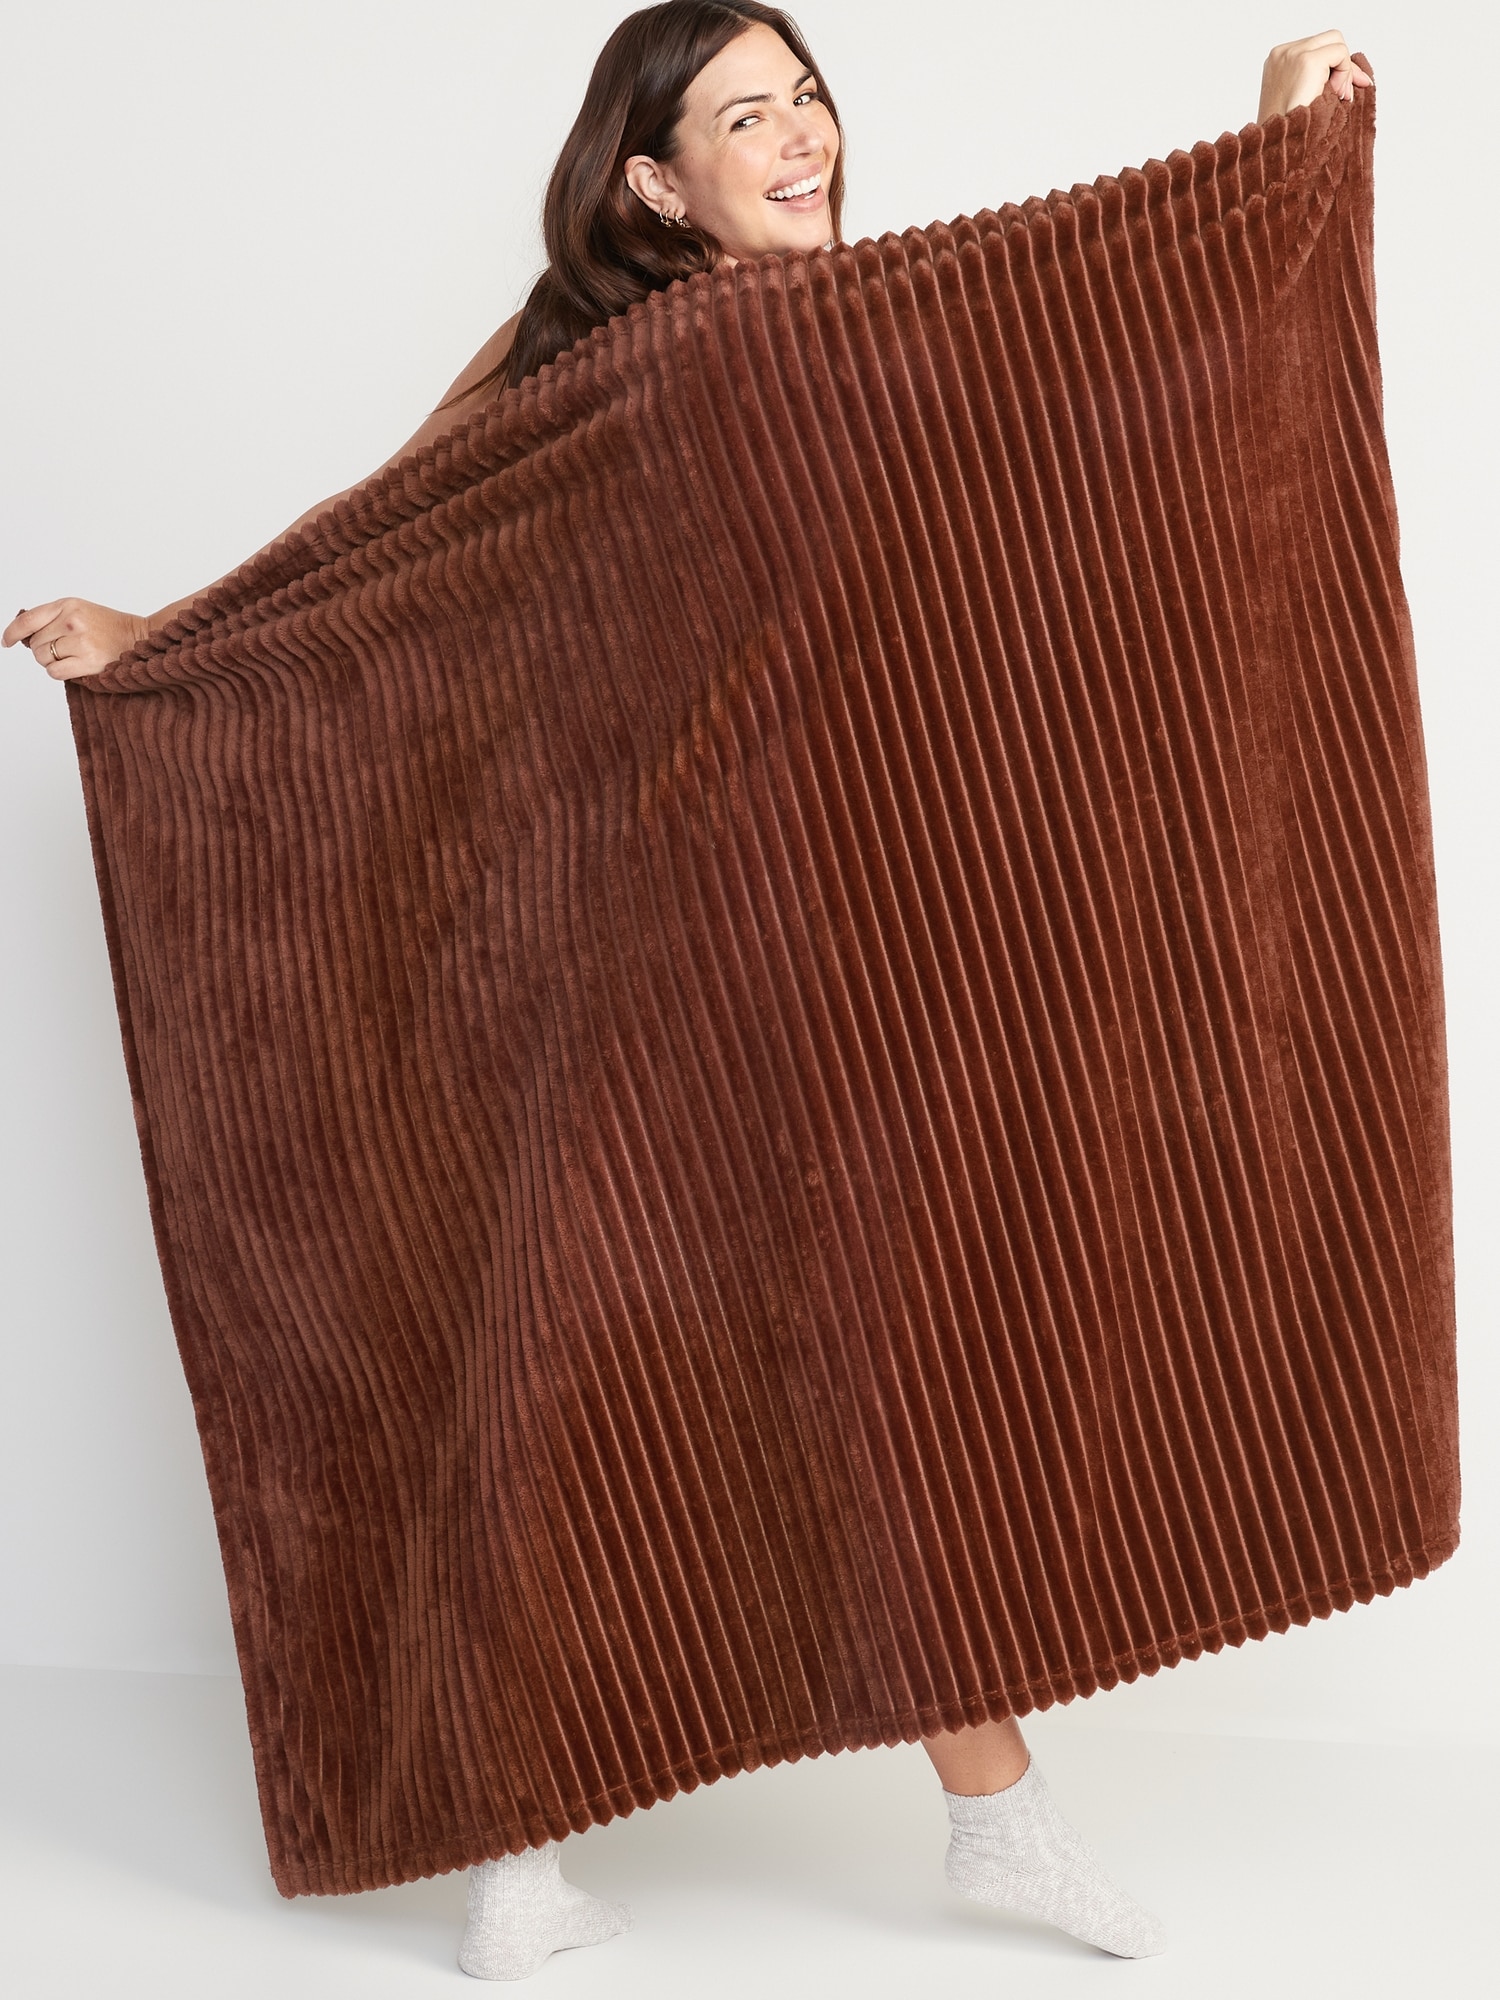 Plush Textured-Rib Blanket for the Family